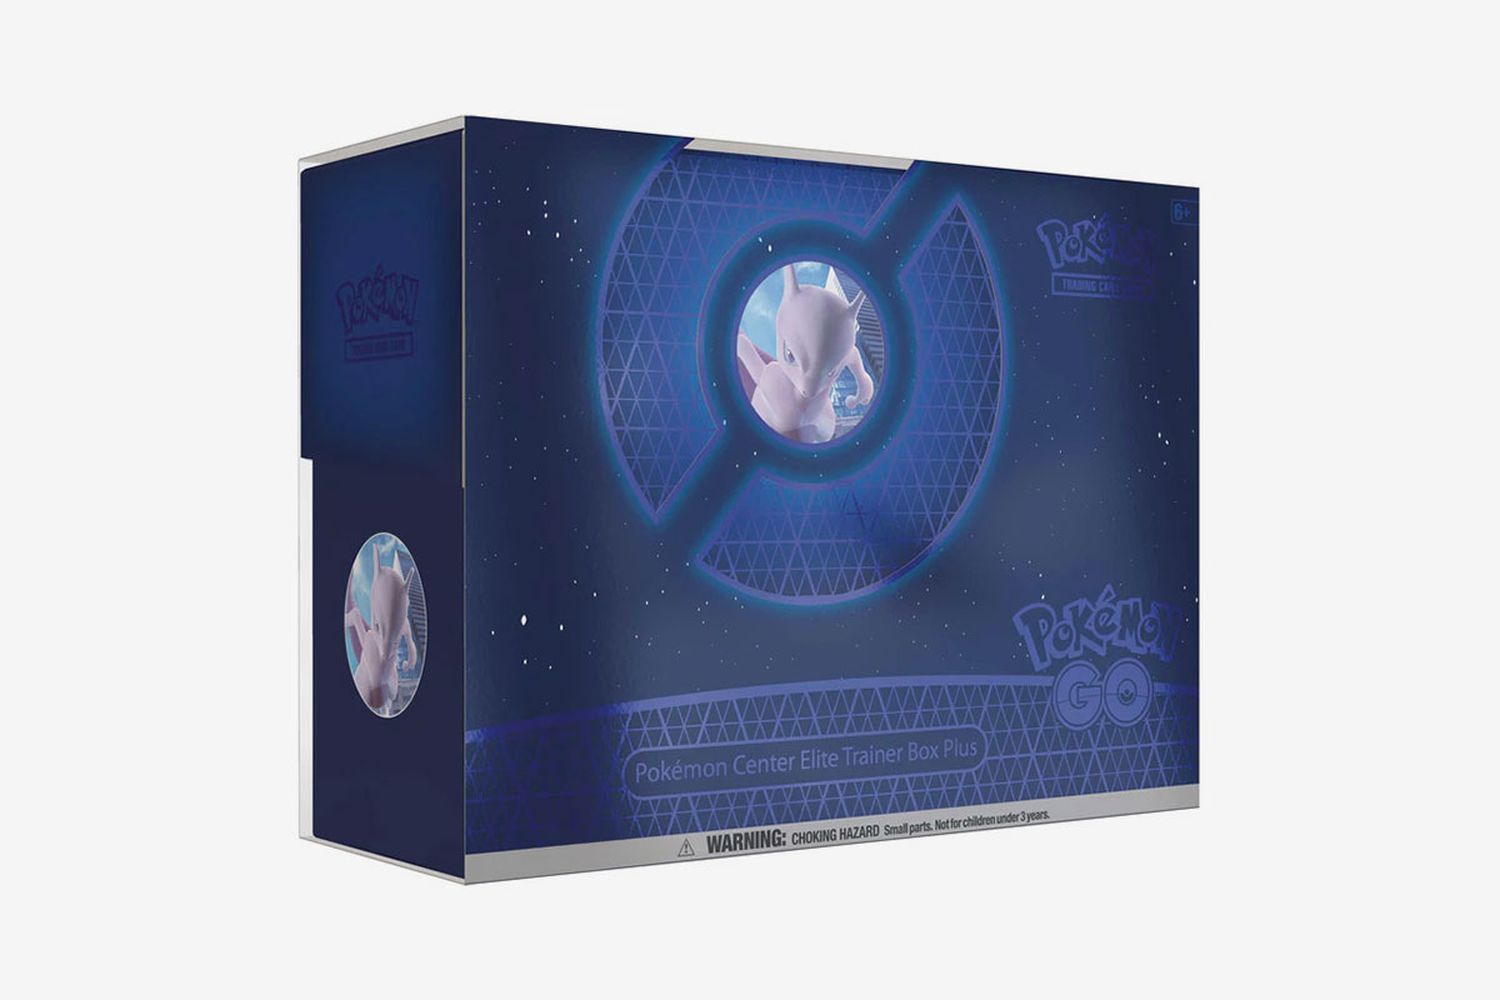 Pokémon GO Pokémon Center Elite Trainer Box Plus